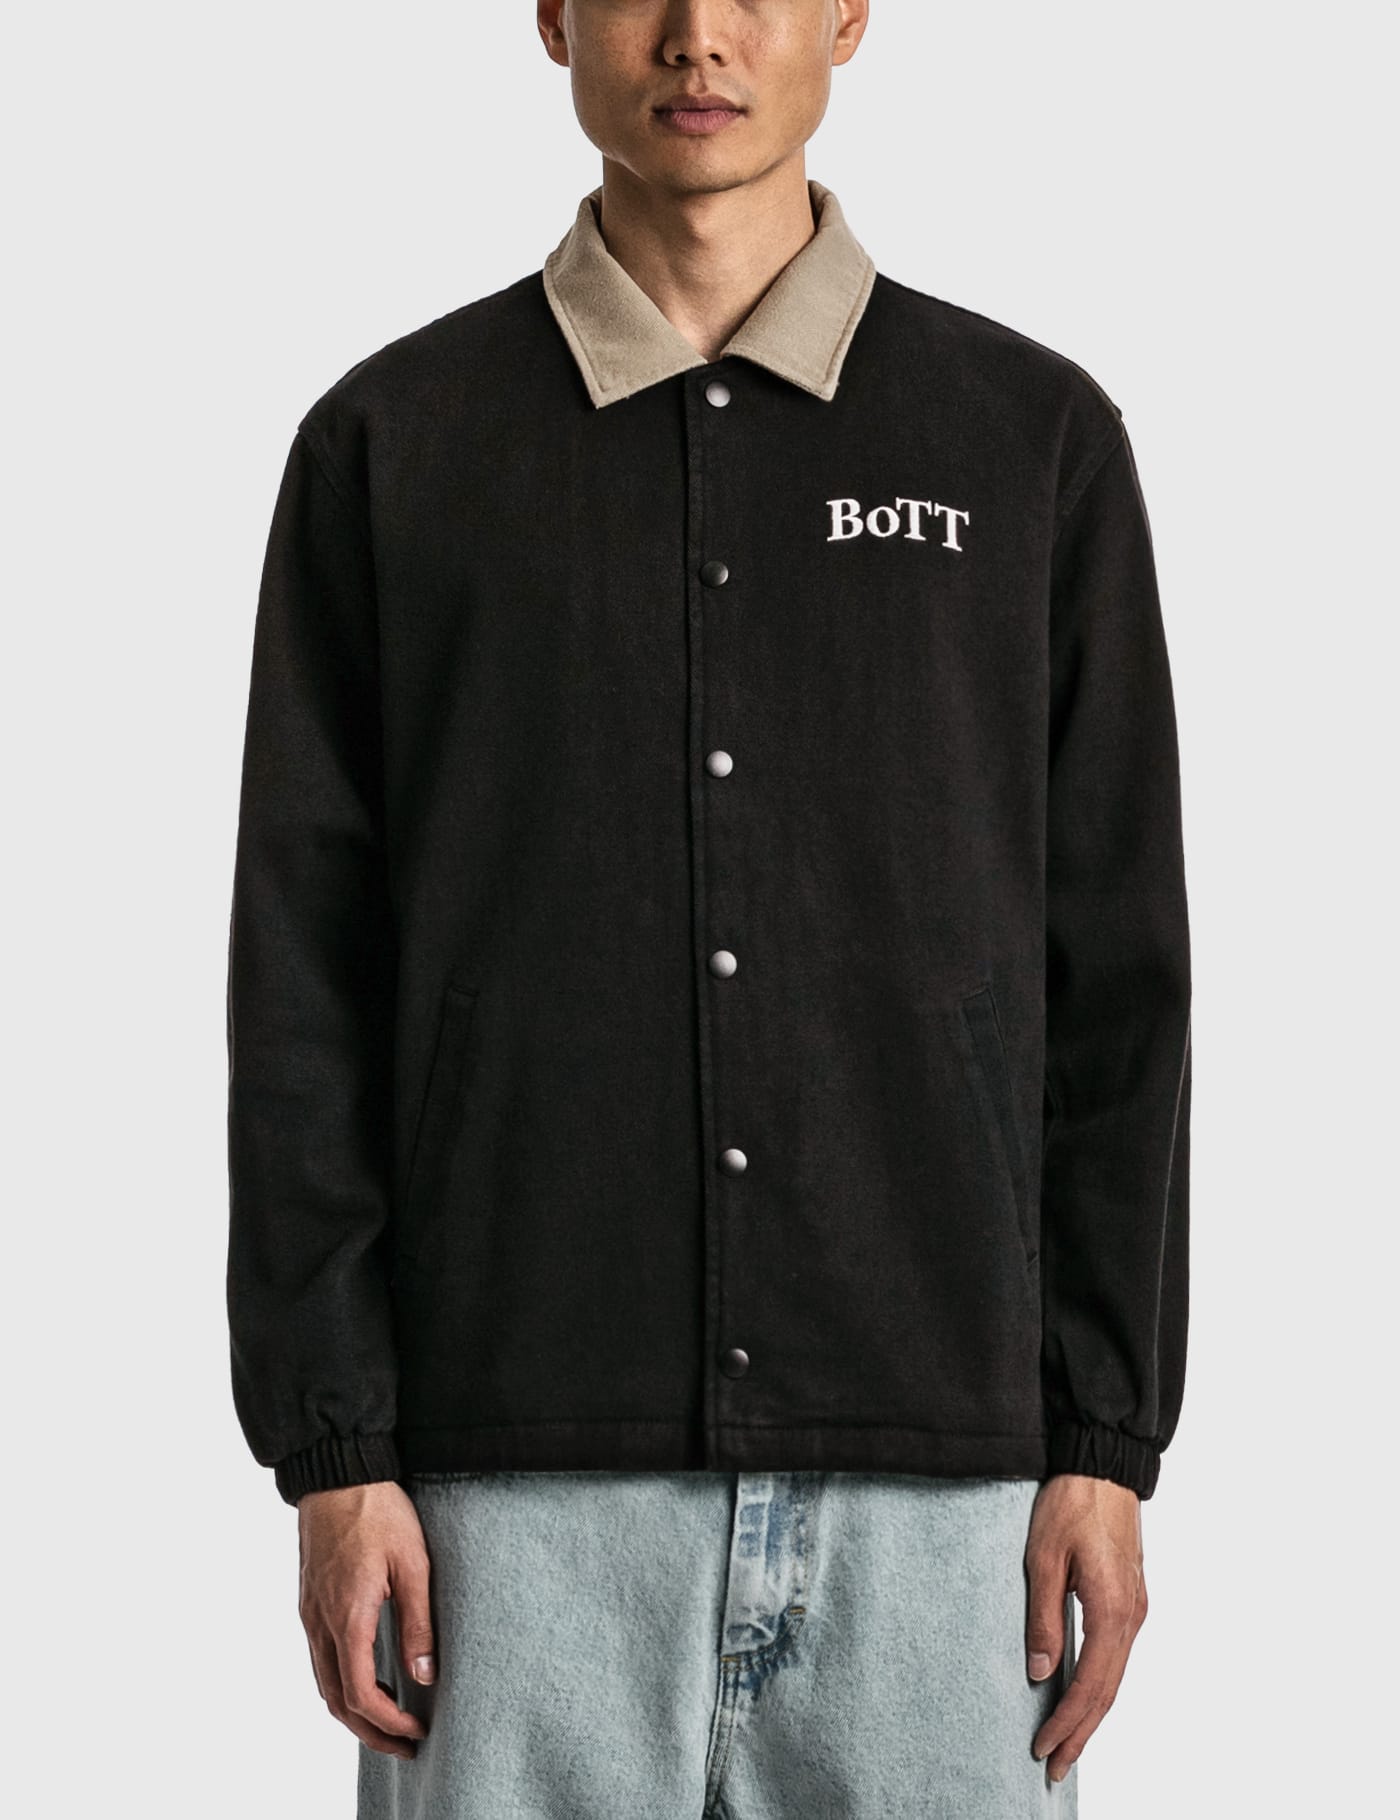 BoTT - Heavy Twill Coach Jacket | HBX - Globally Curated Fashion